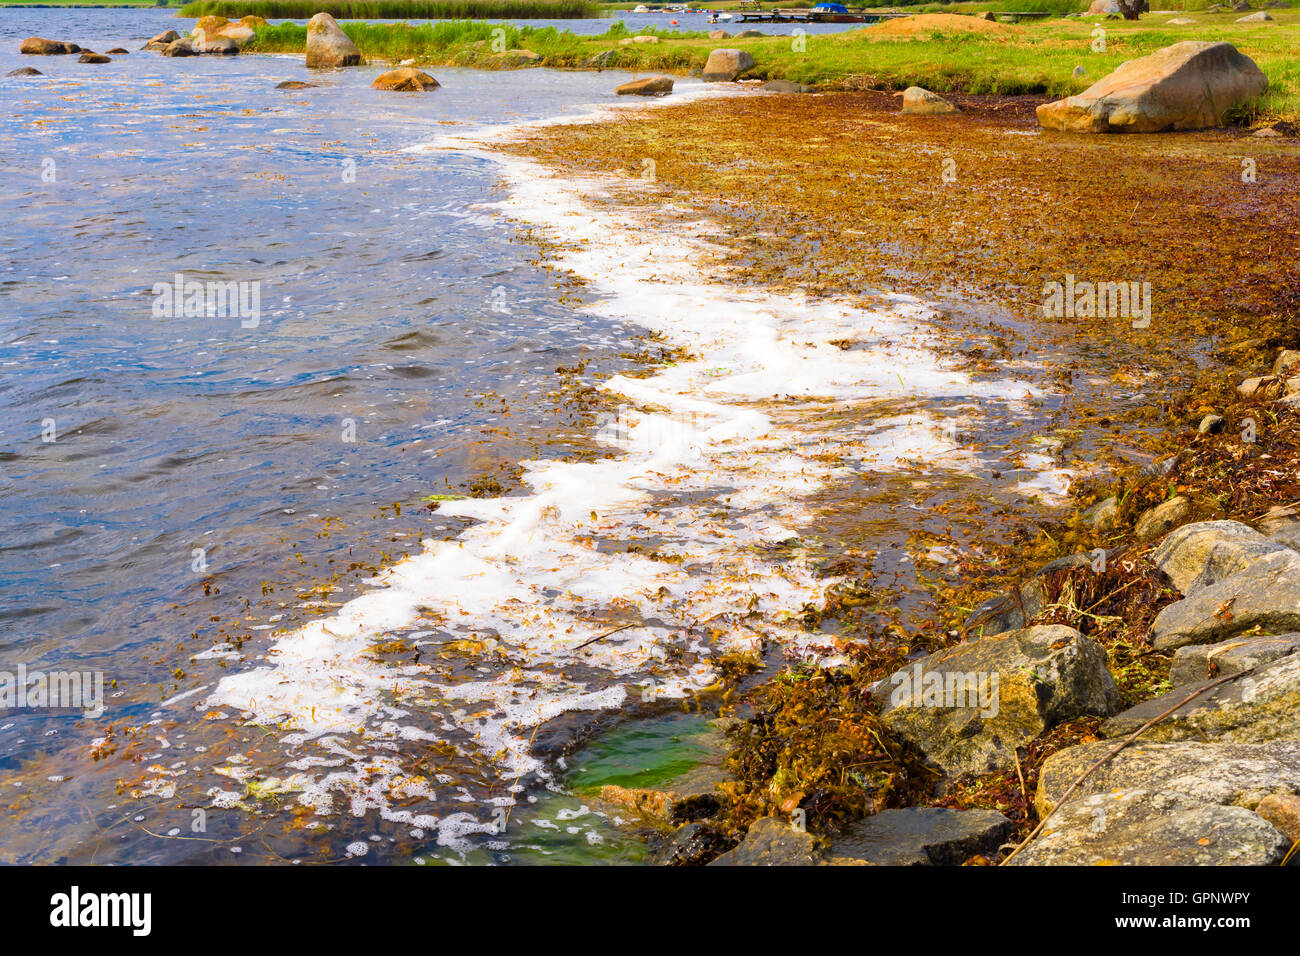 Bladder wrack (Fucus vesiculosus) and foam gathering in shallow shoreline bay. Stock Photo